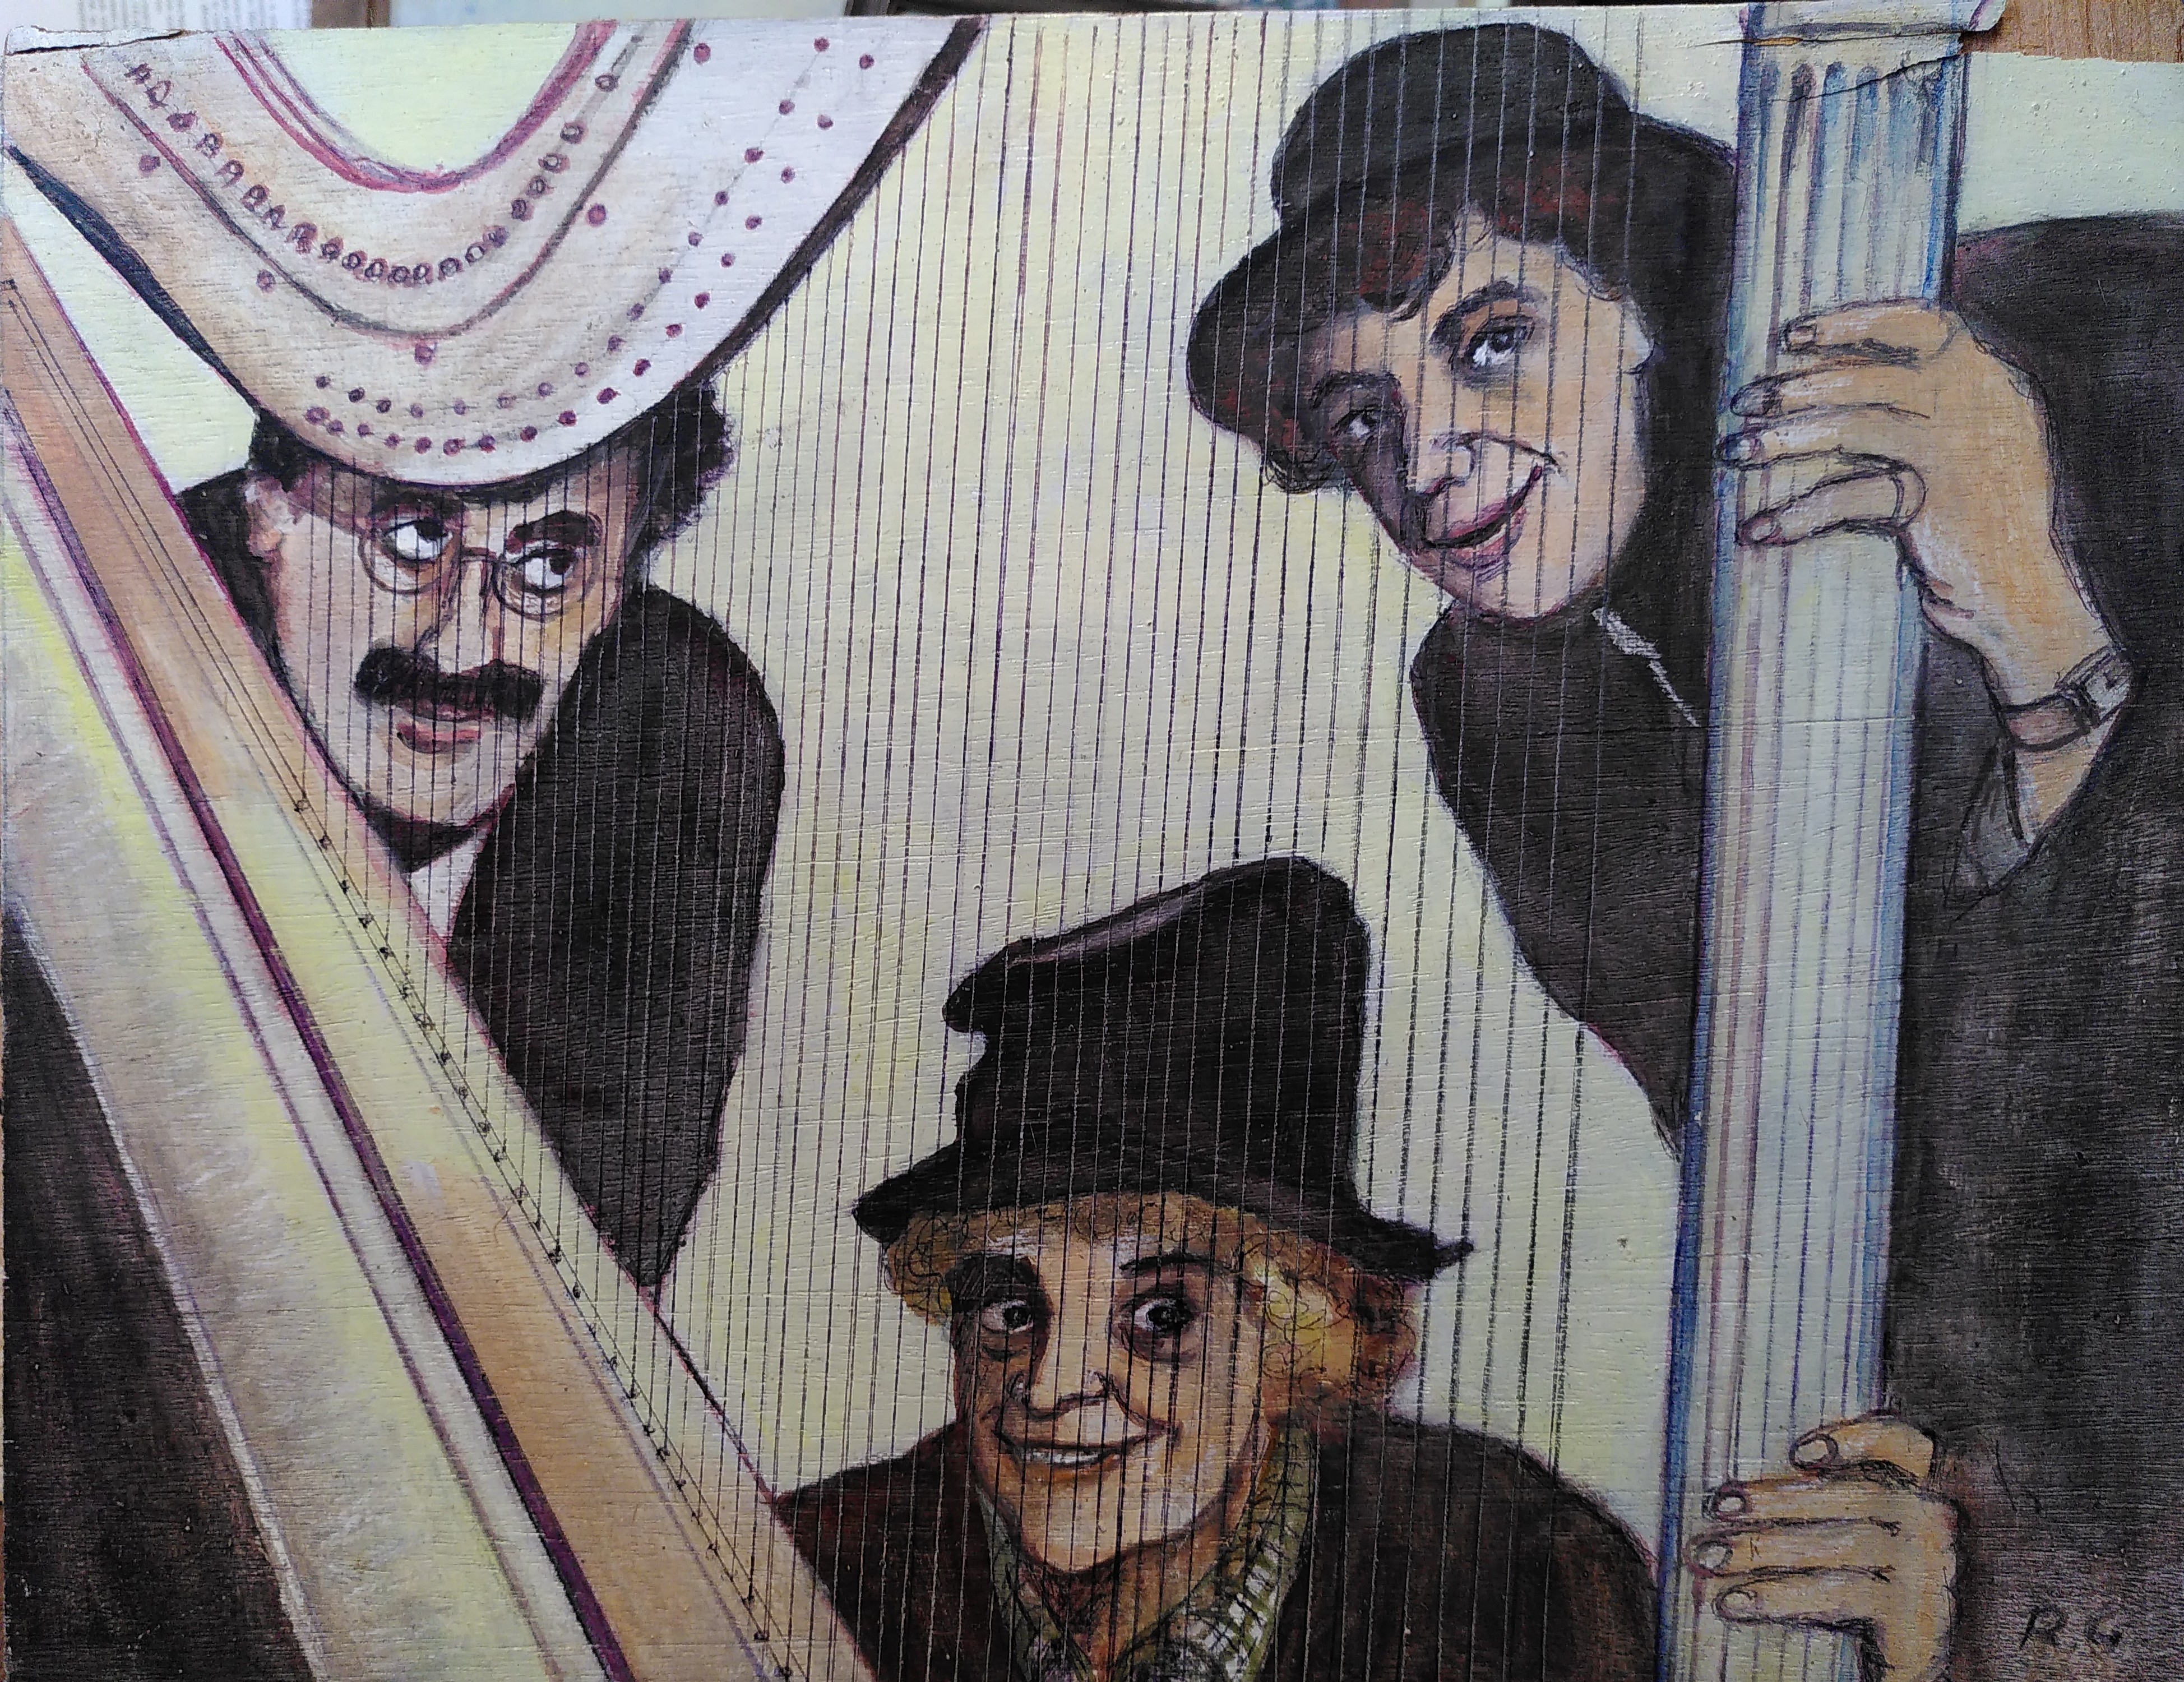 Marx Brothers : Groucho - Harpo - Chico